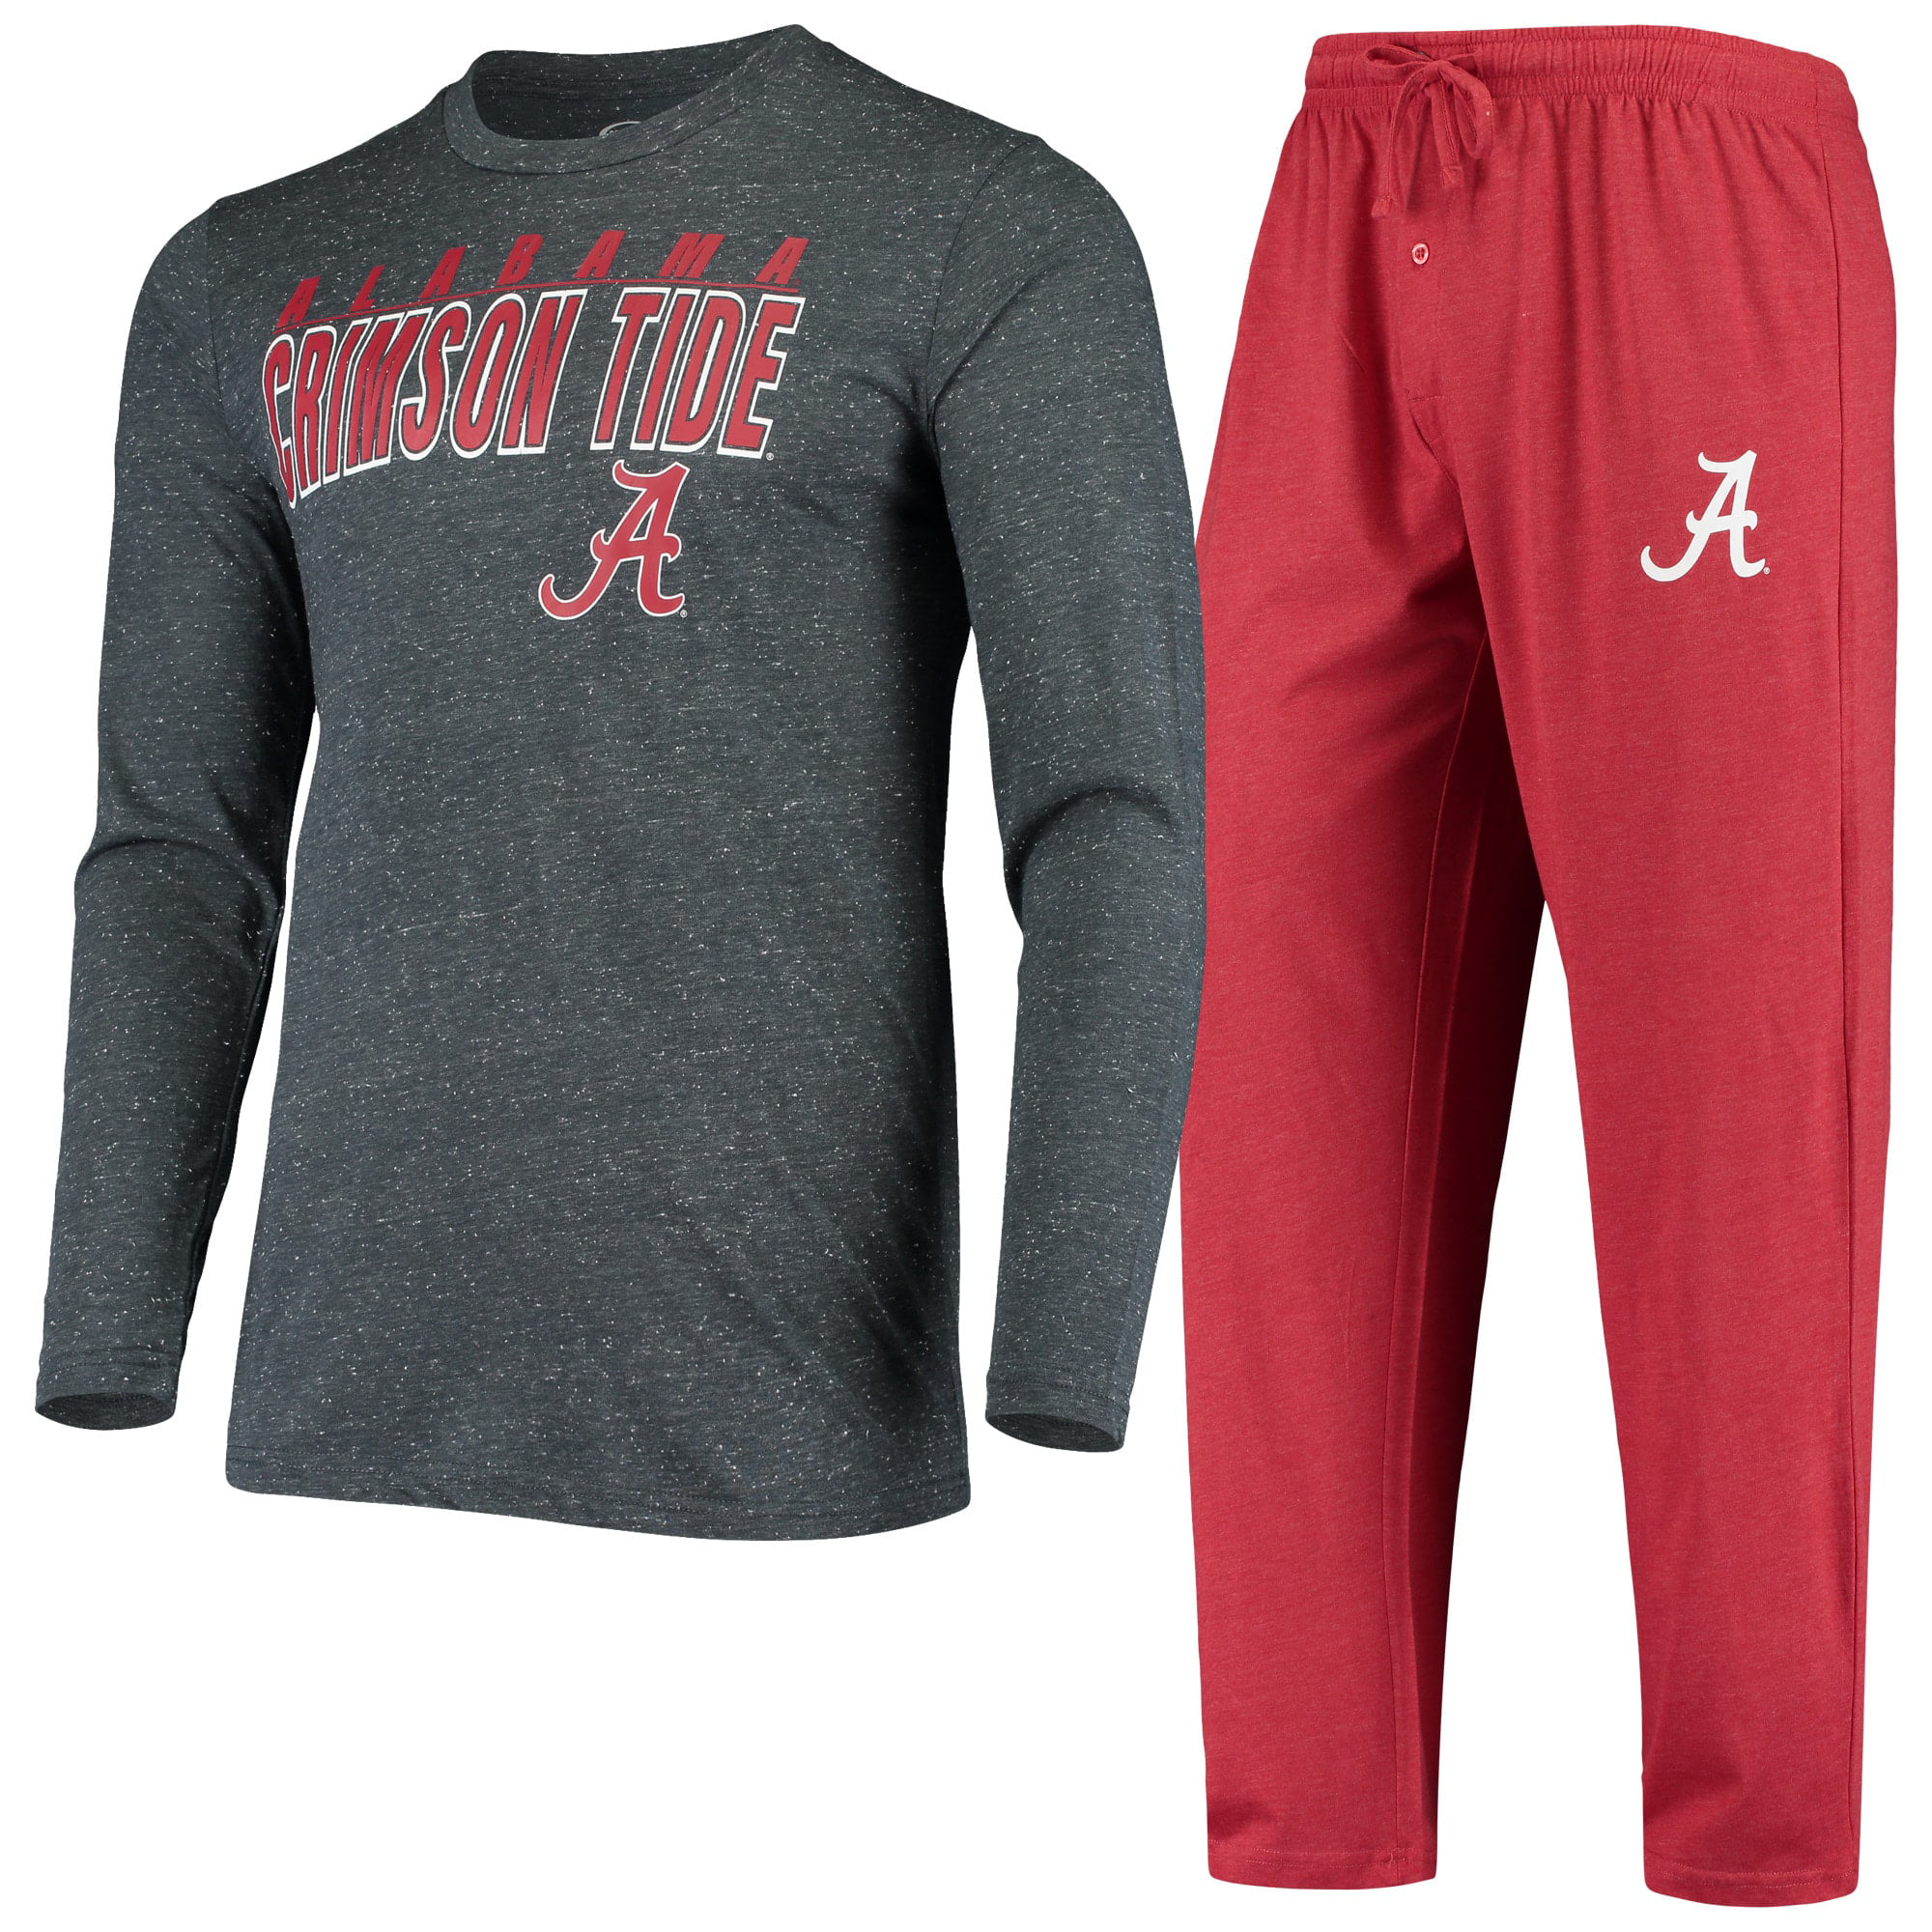 NCAA Alabama Crimson Tide Mens Shirt and Pajama Pants Flannel PJ Sleep Set